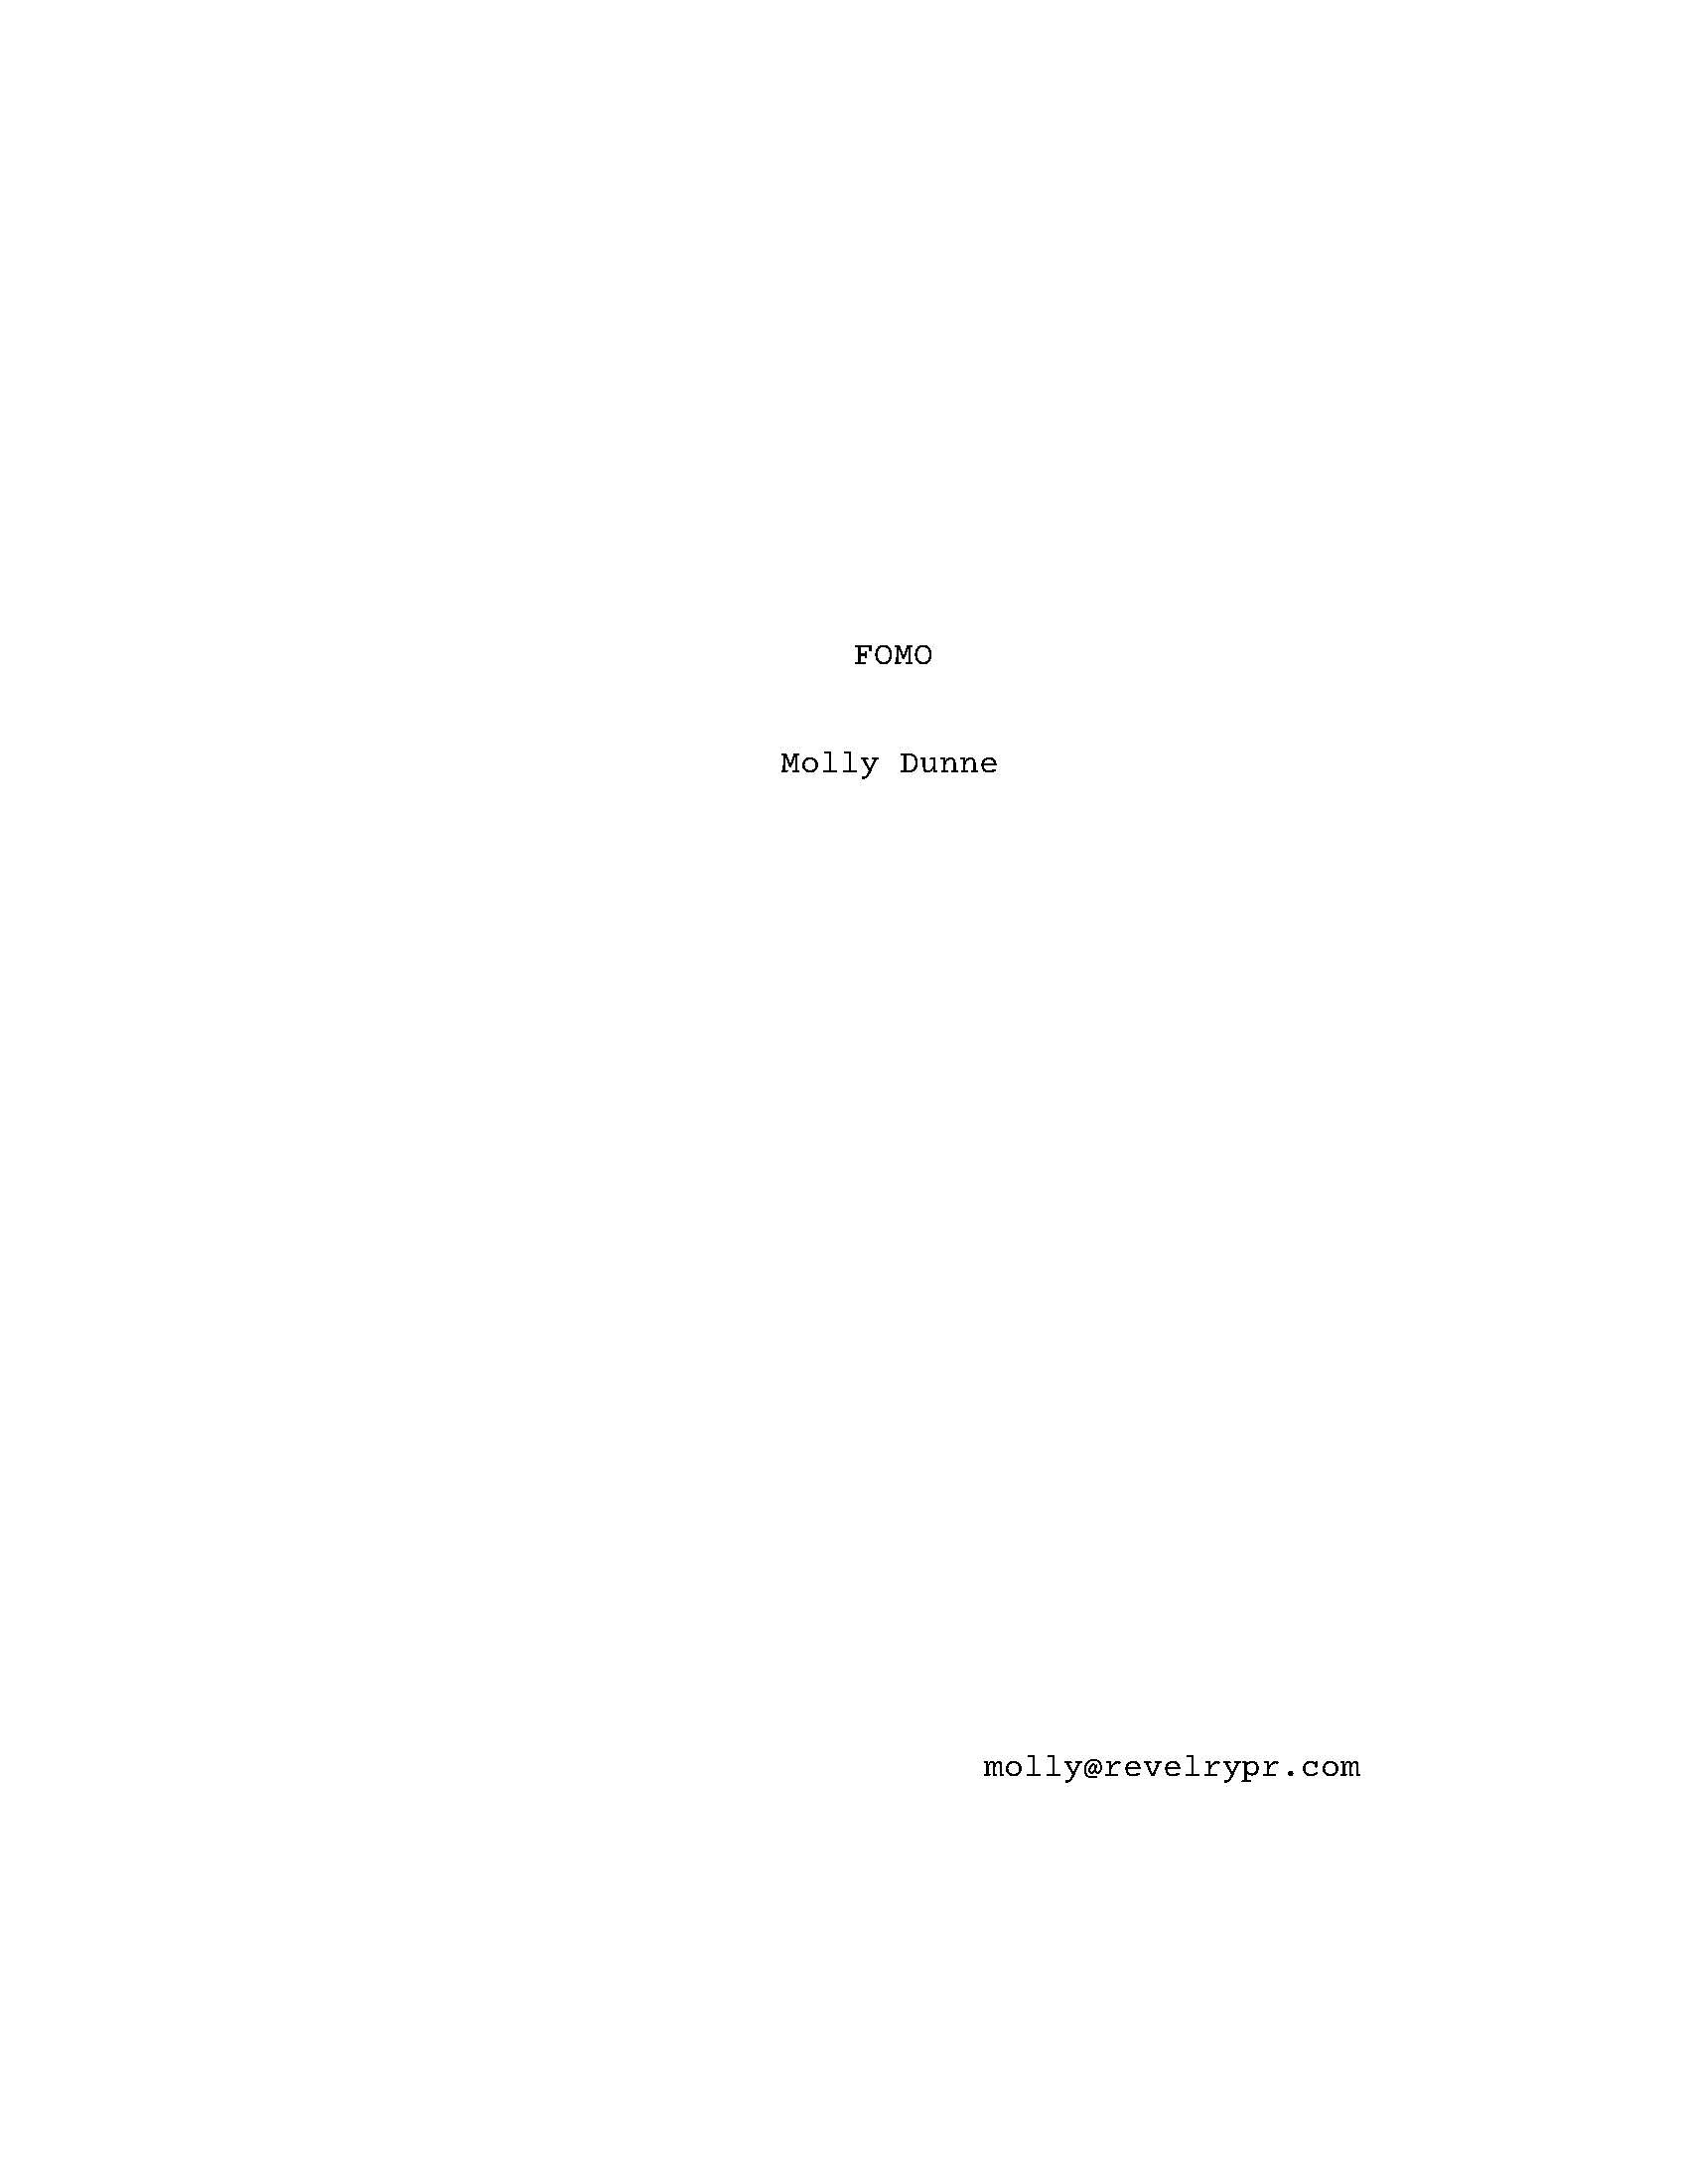 Script FOMO(9)_Page_1.jpg